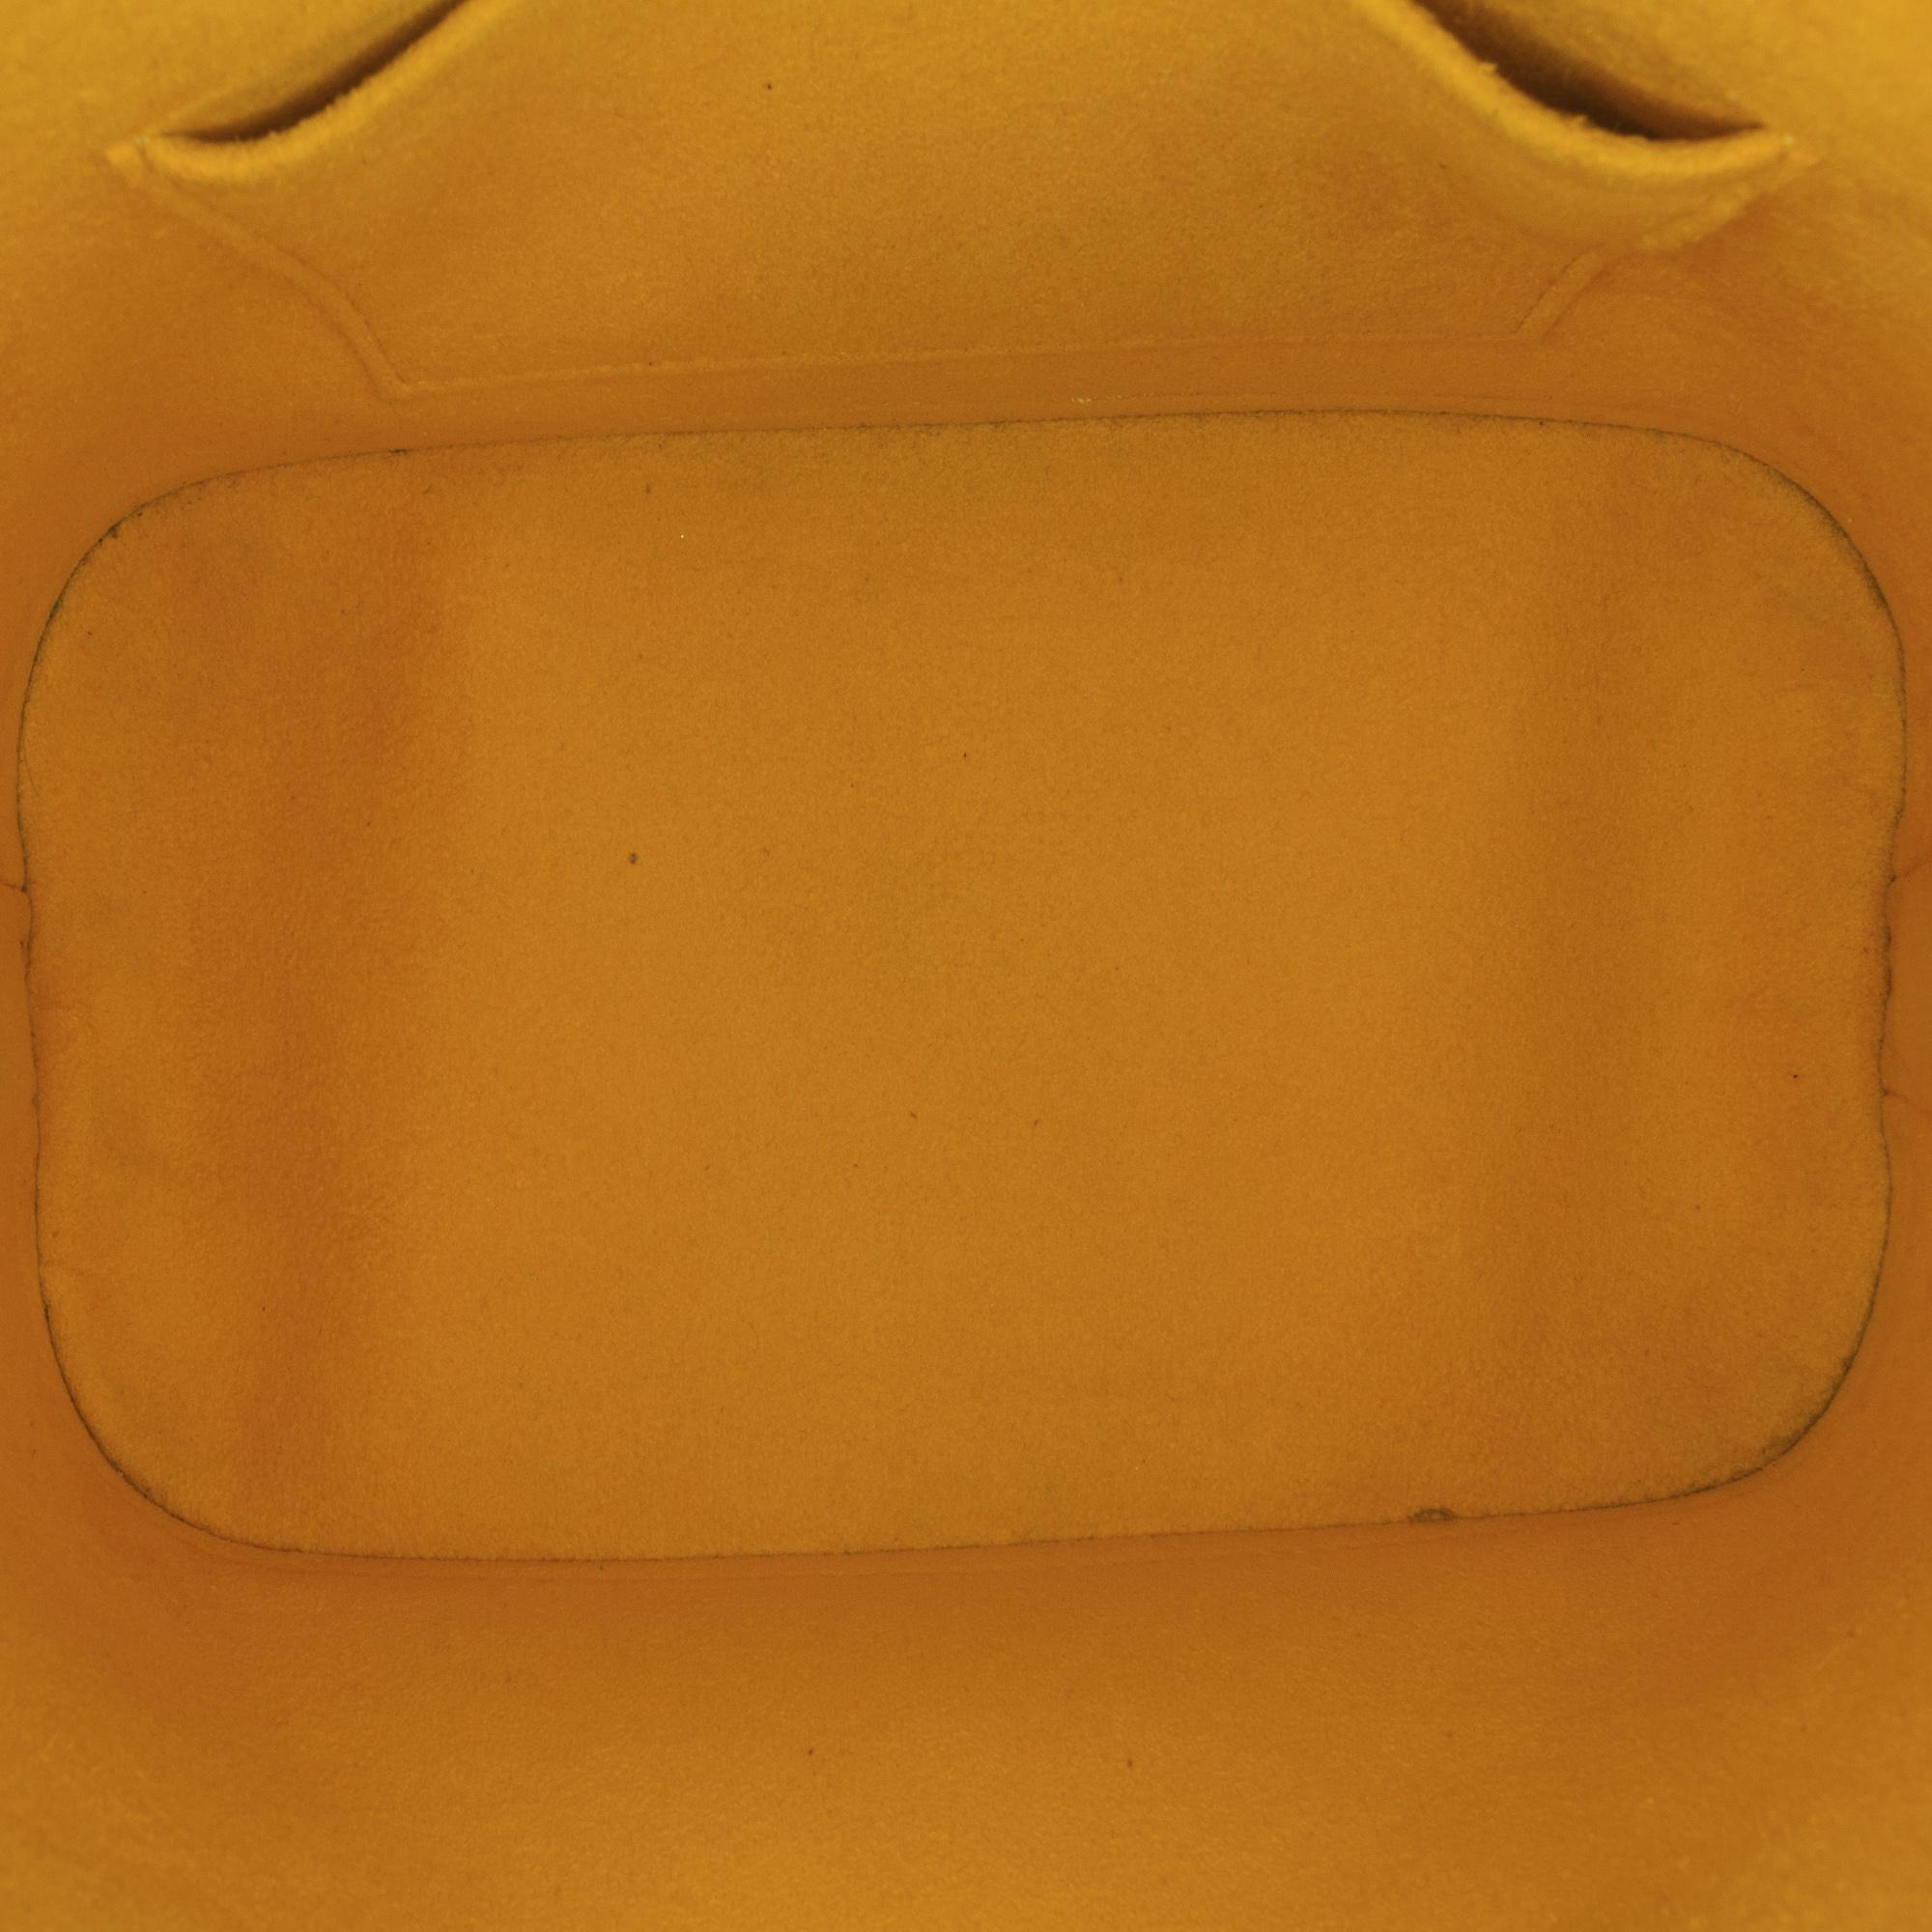 Louis Vuitton Yellow Epi Alma BB